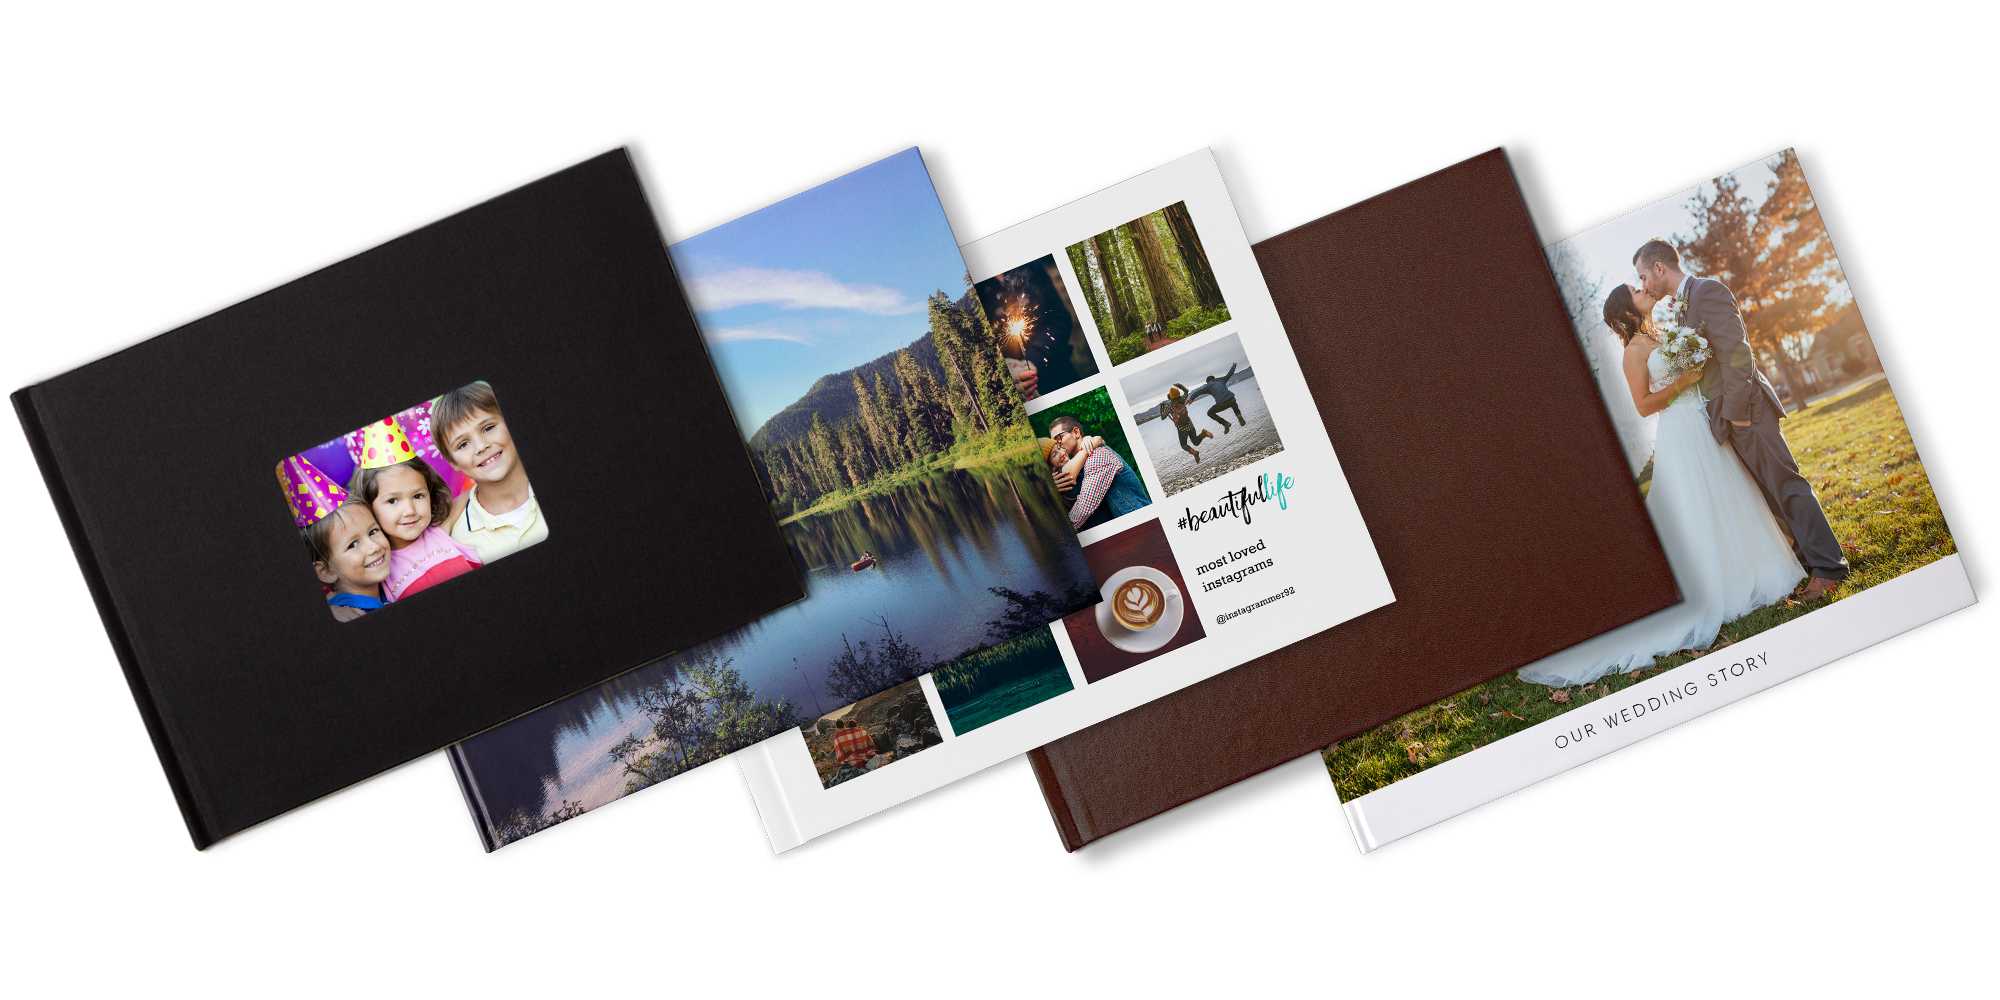 Photo Books, Custom Photo Books, Personalized Photo Books Online